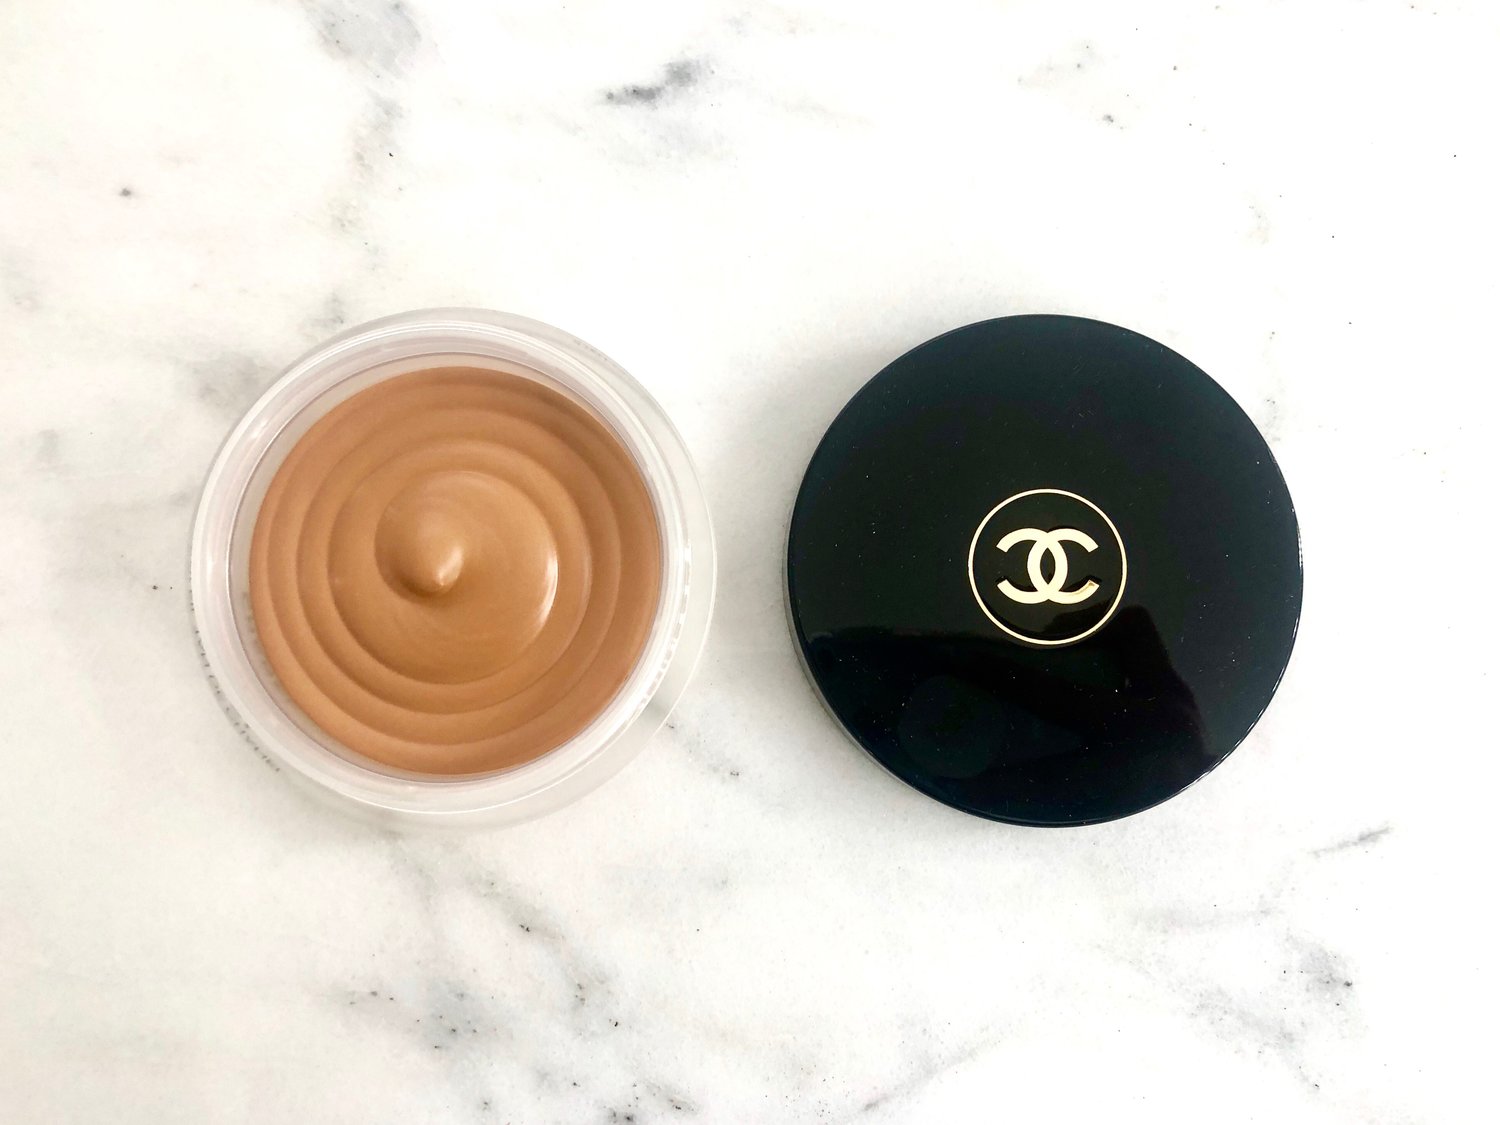 Chanel Soleil Tan de Chanel Bronzing Makeup Base Review — cosmetic